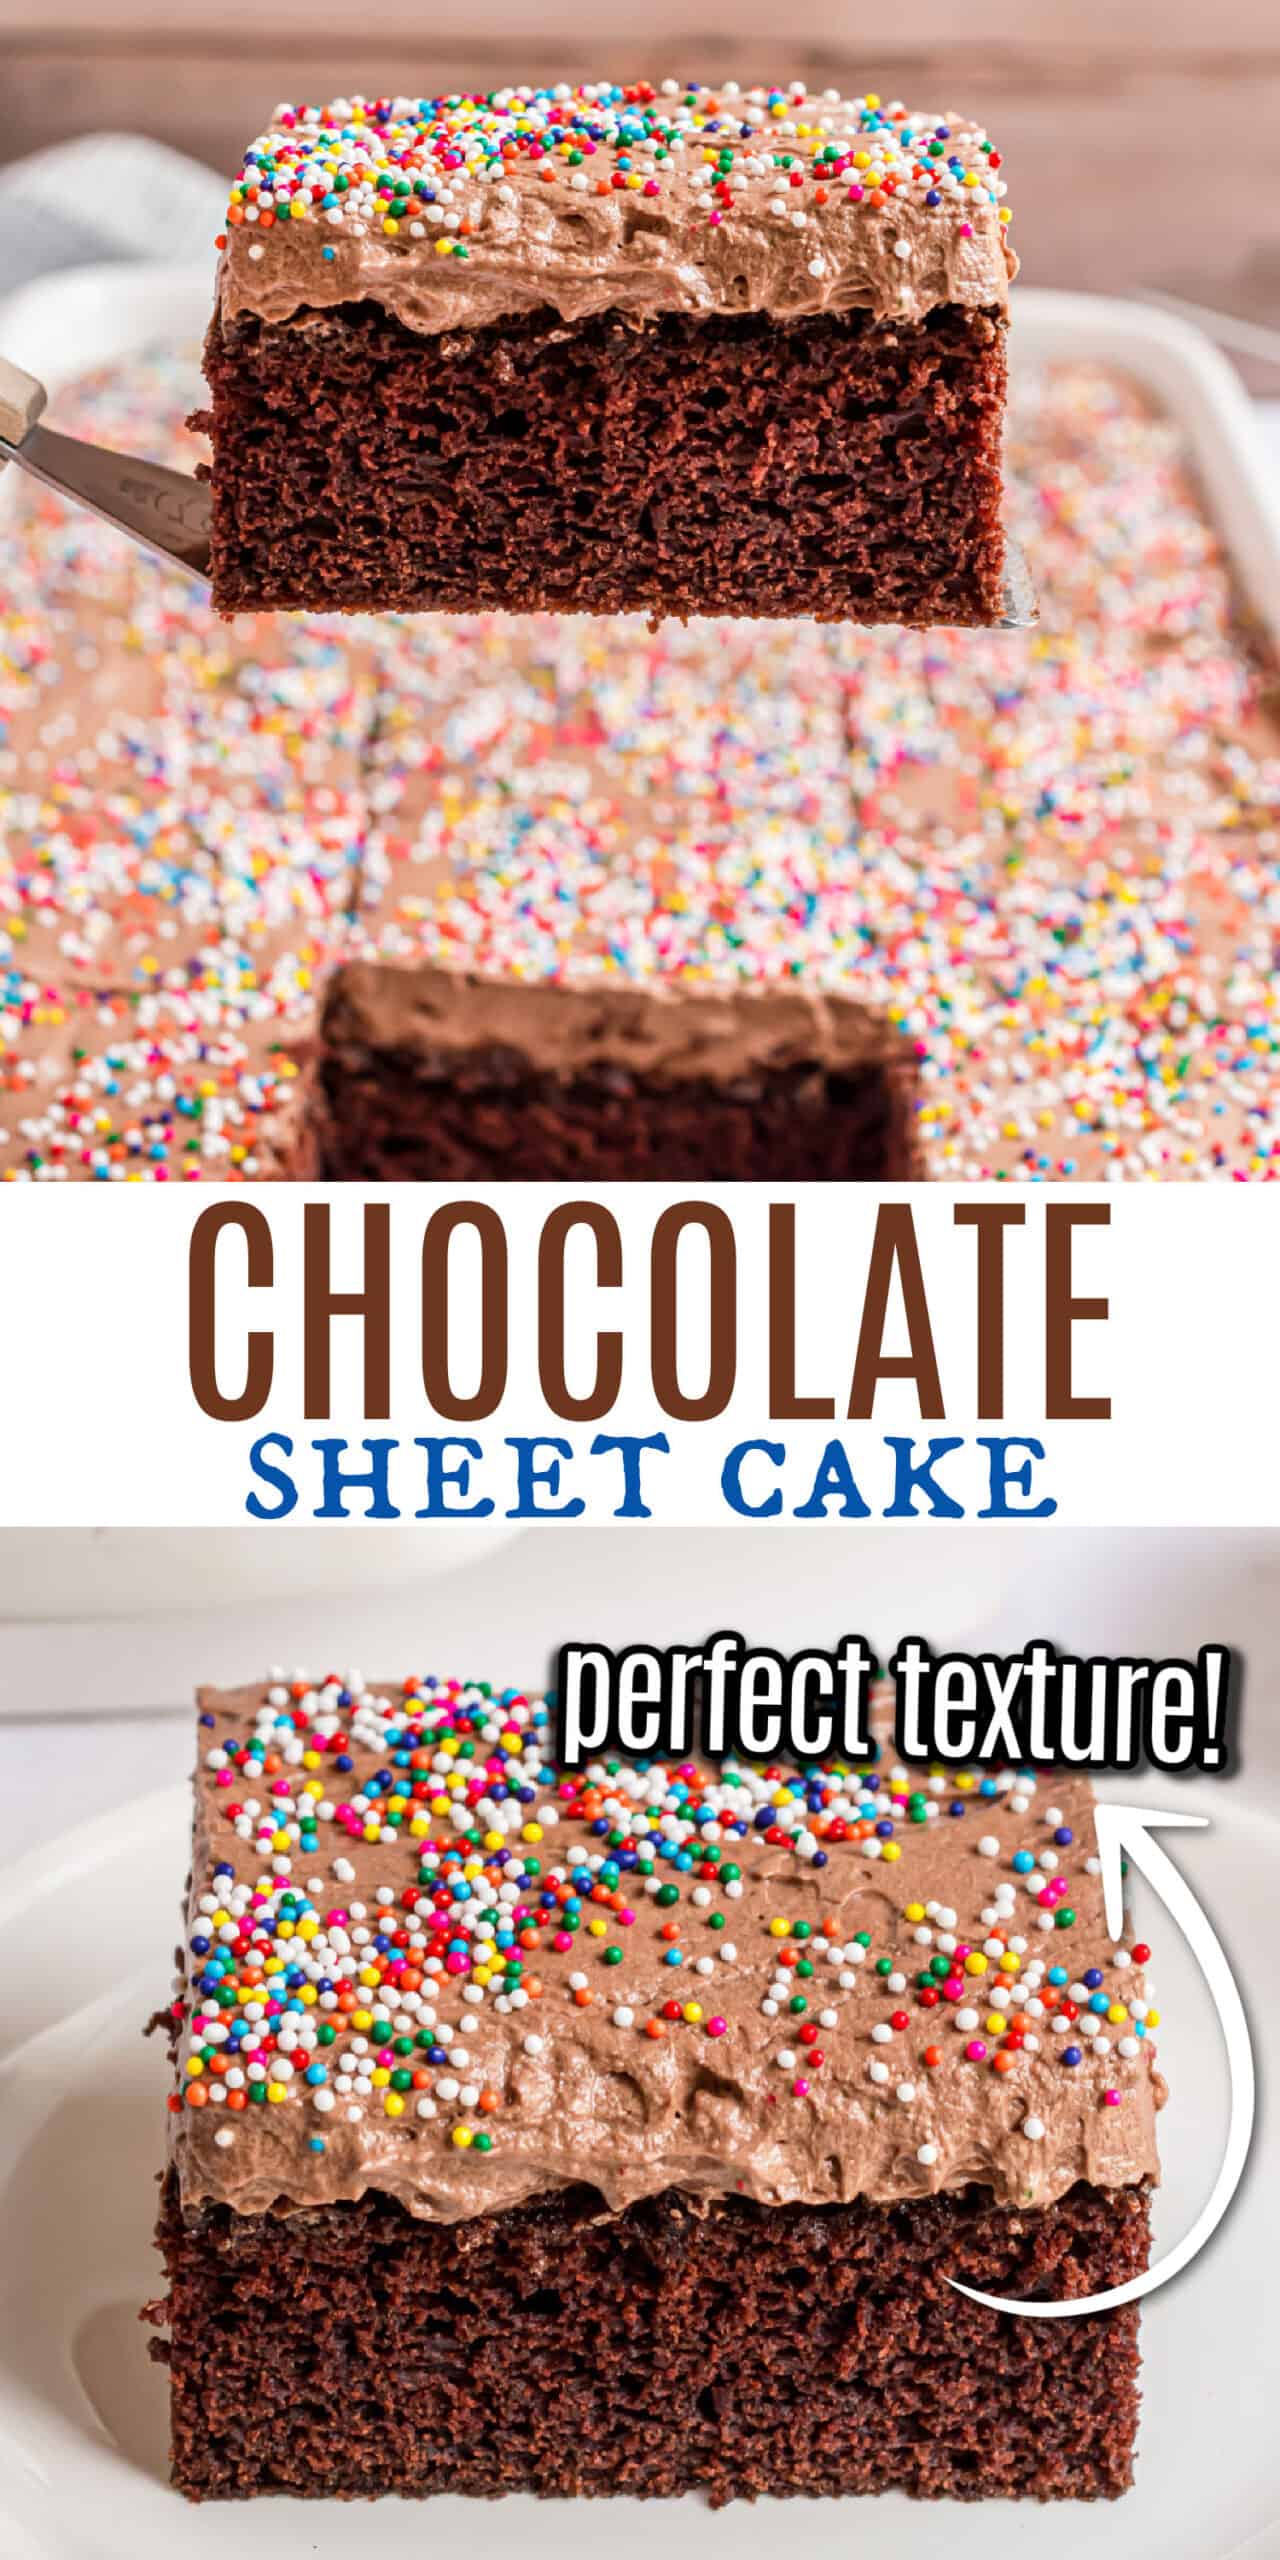 https://www.shugarysweets.com/wp-content/uploads/2021/08/Chocolate-sheet-cake-pinterest-scaled.jpg